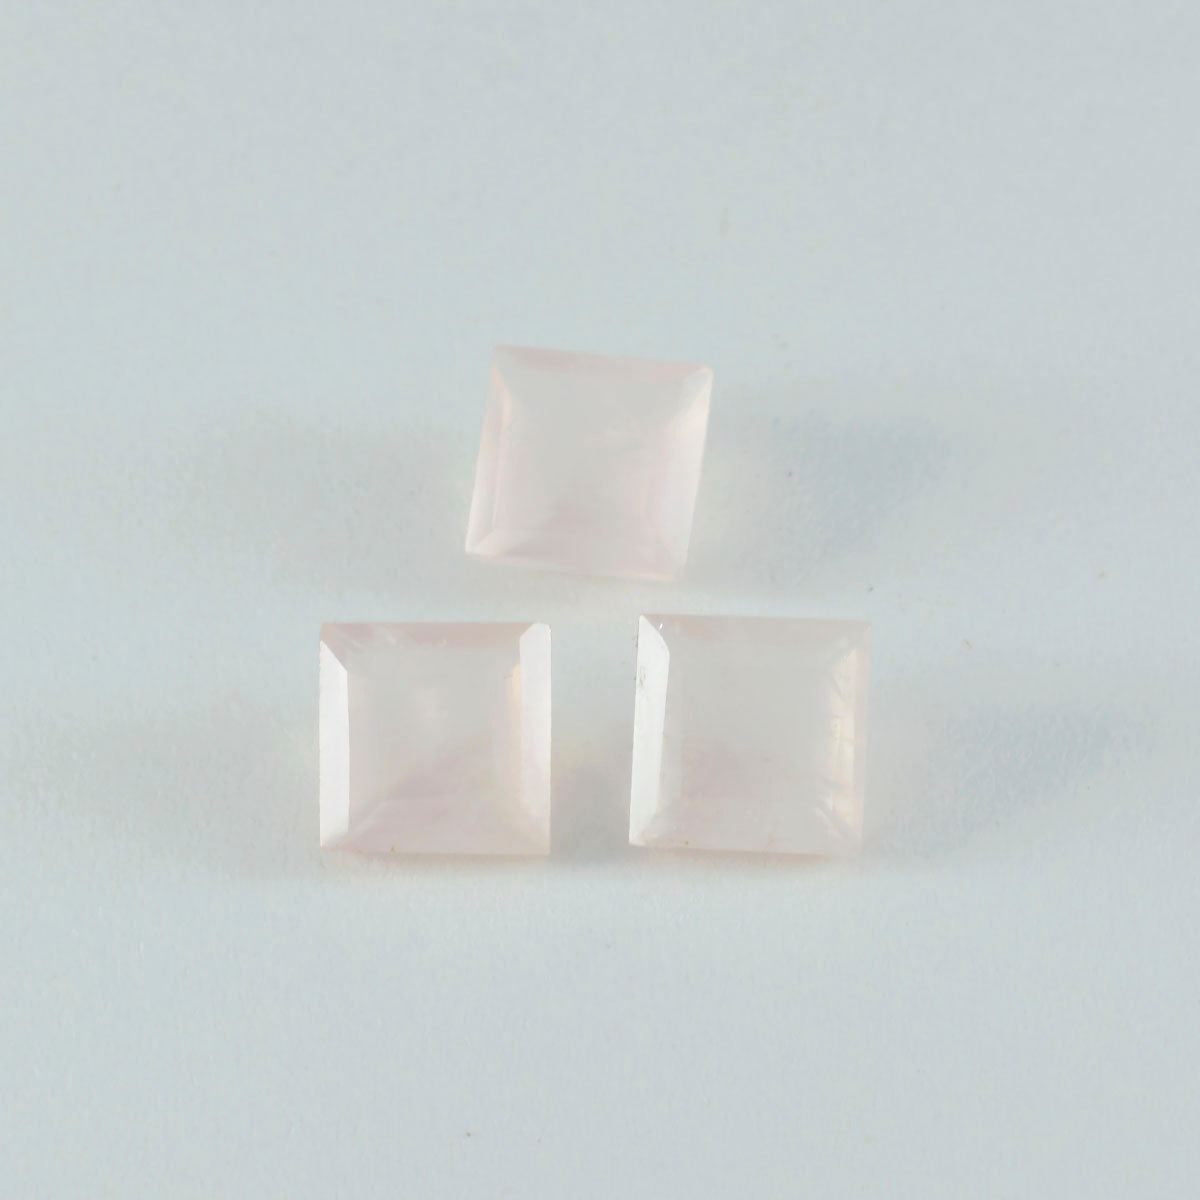 Riyogems 1PC Pink Rose Quartz Faceted 9x9 mm Square Shape fantastic Quality Gemstone